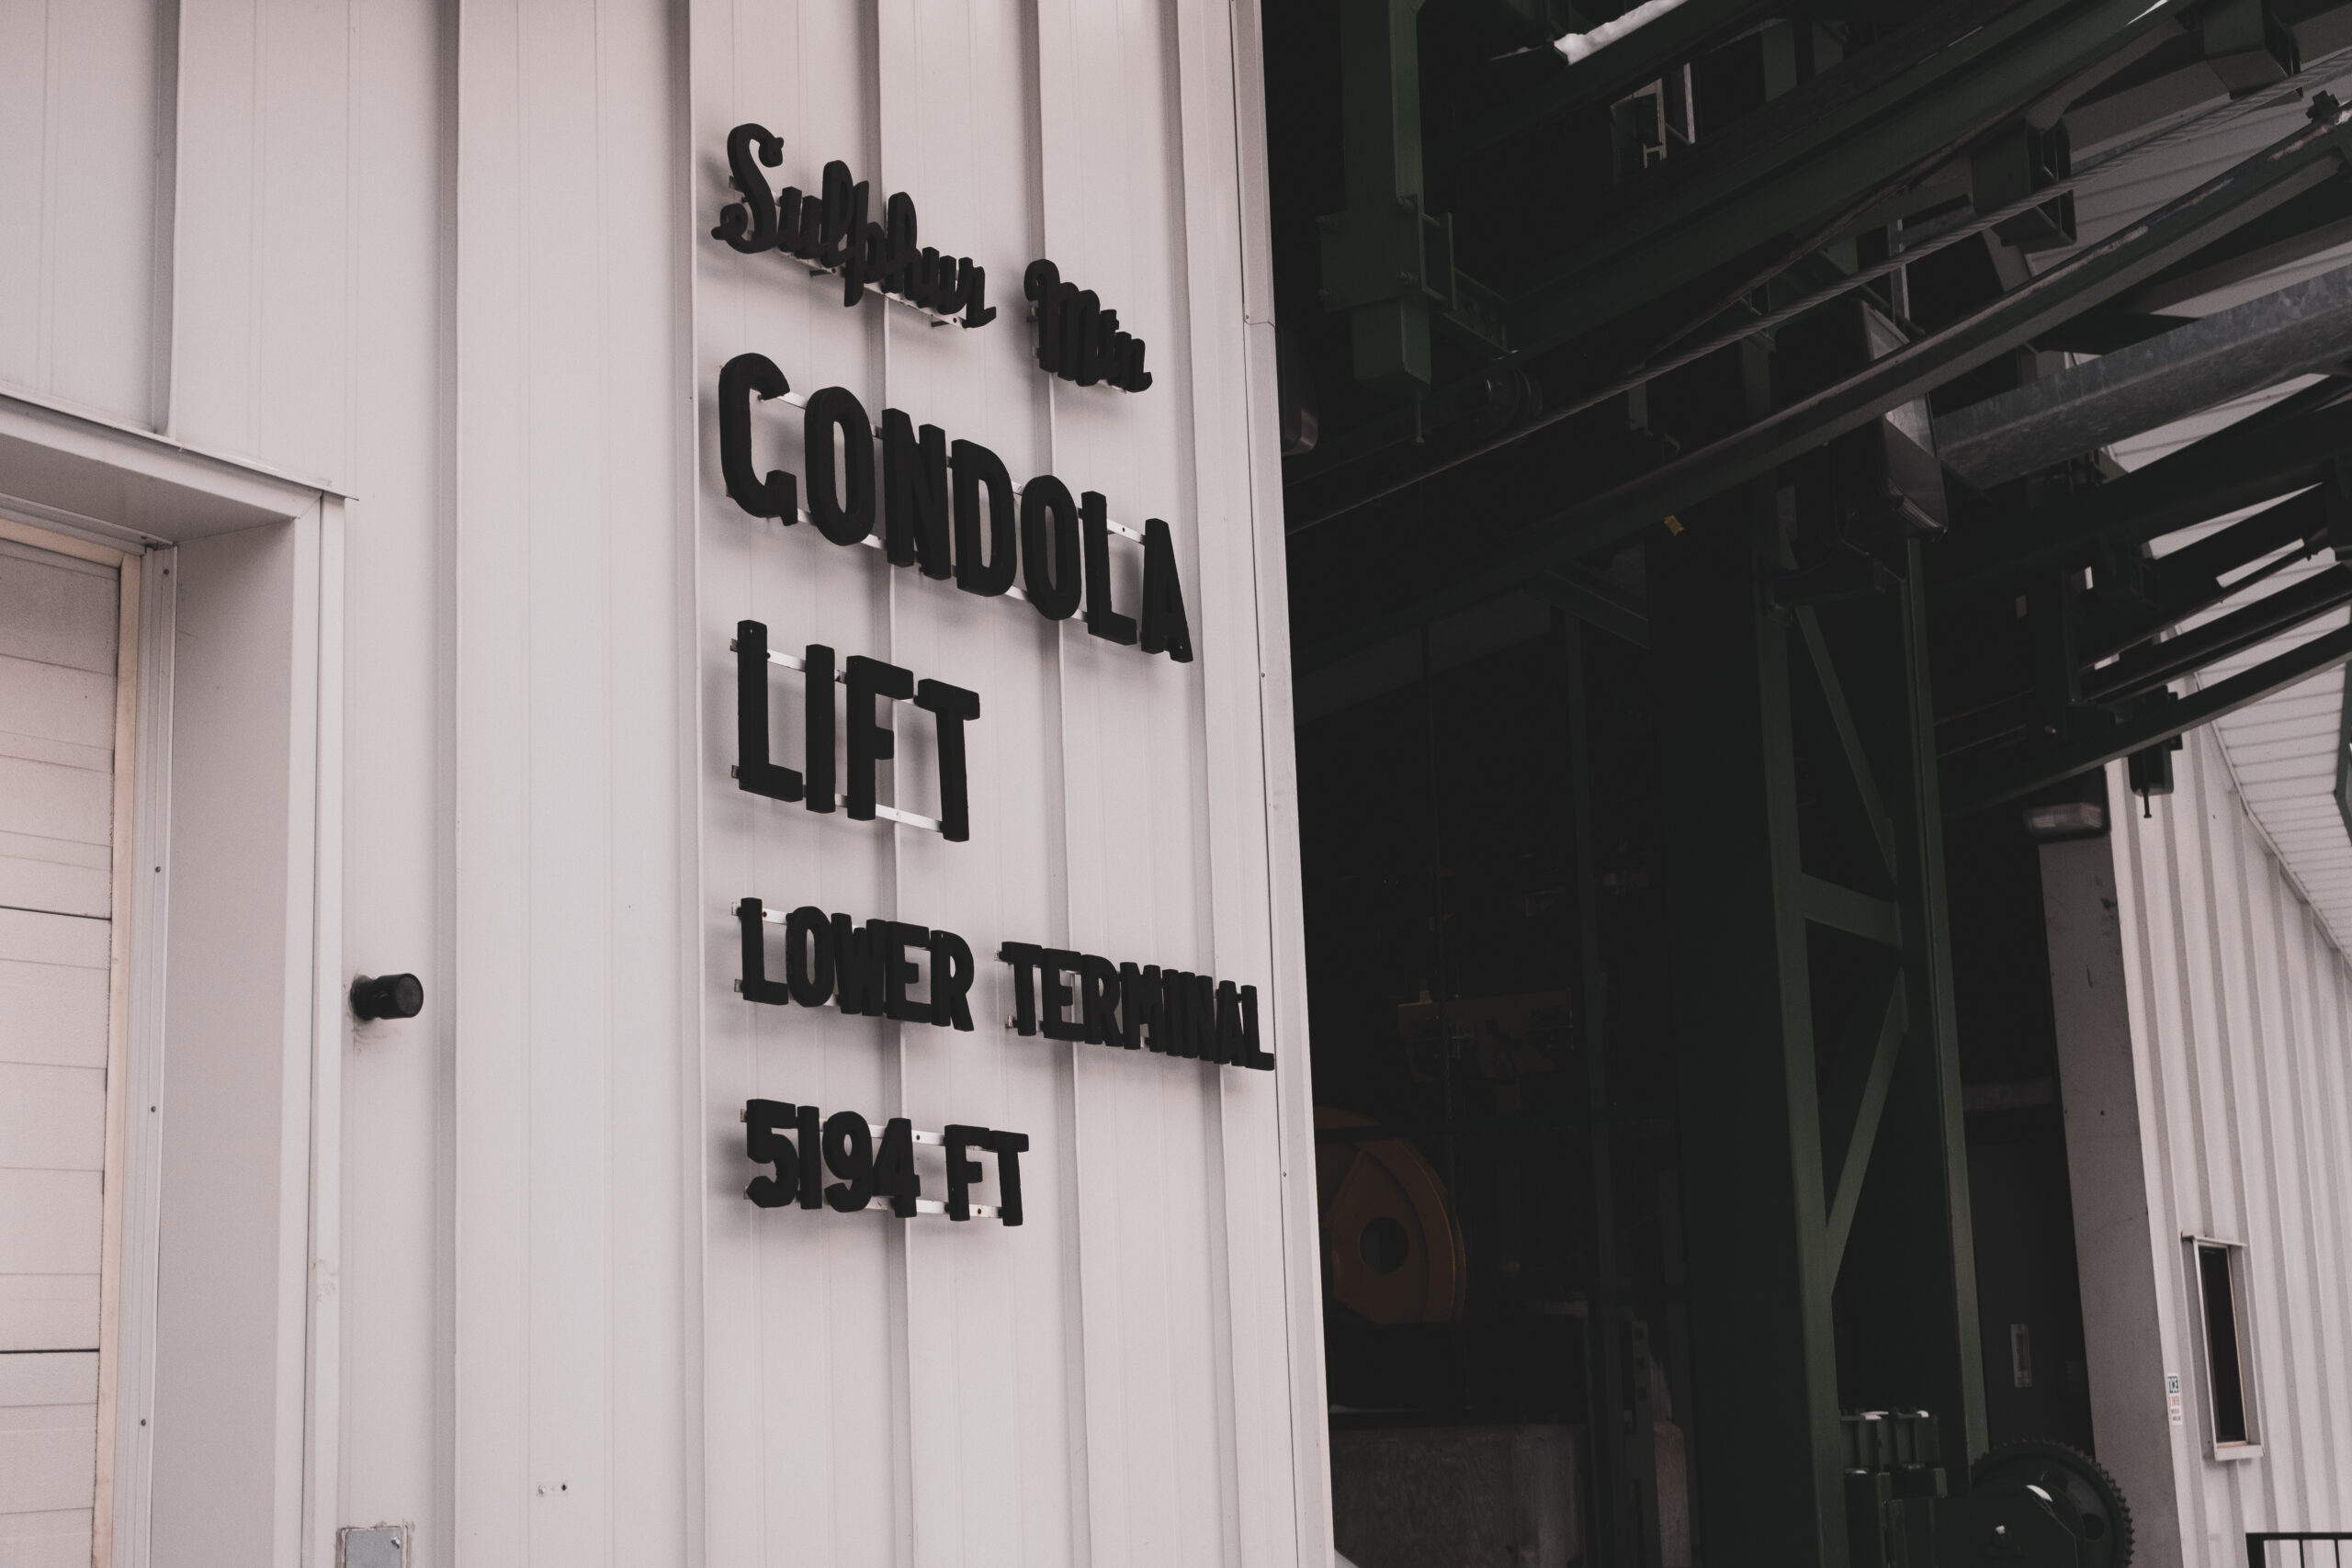 Gondola lift Lower terminal 5,194 ft